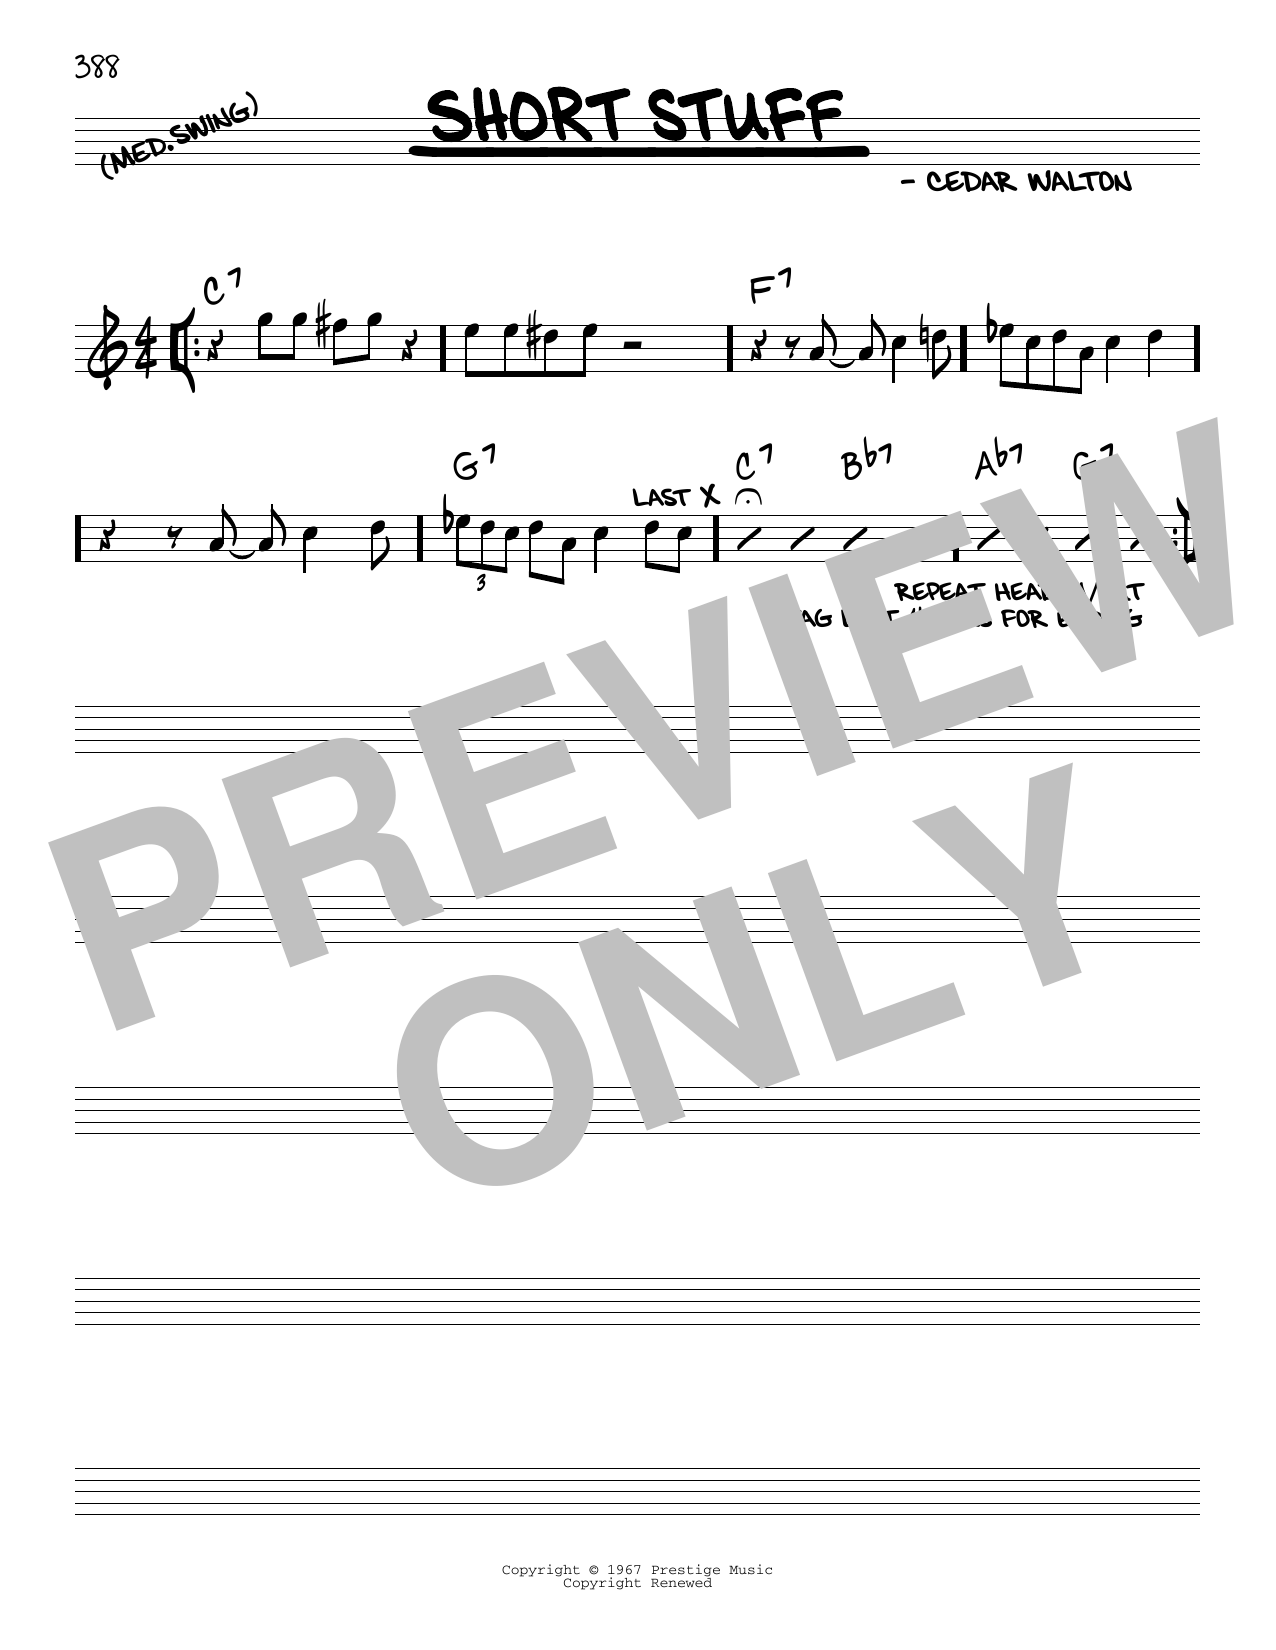 Cedar Walton Short Stuff Sheet Music Notes & Chords for Real Book – Melody & Chords - Download or Print PDF